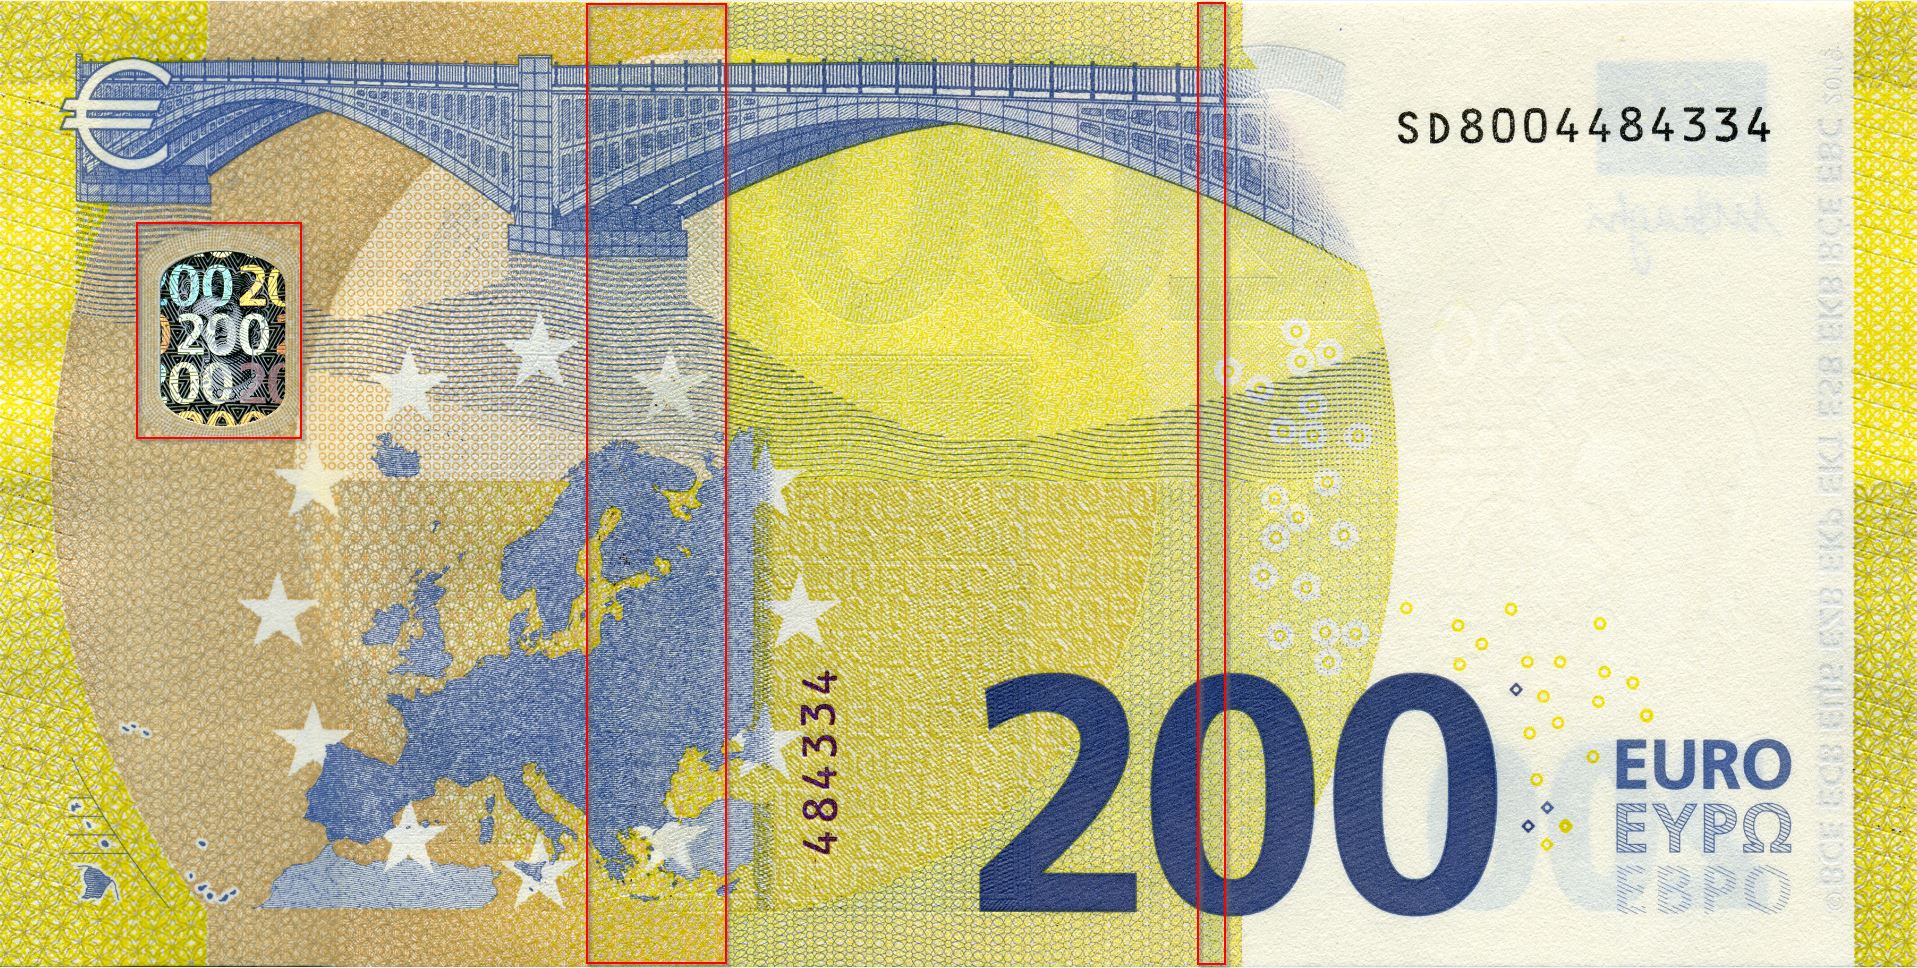 200 euro banknote, Europa series - reverse side